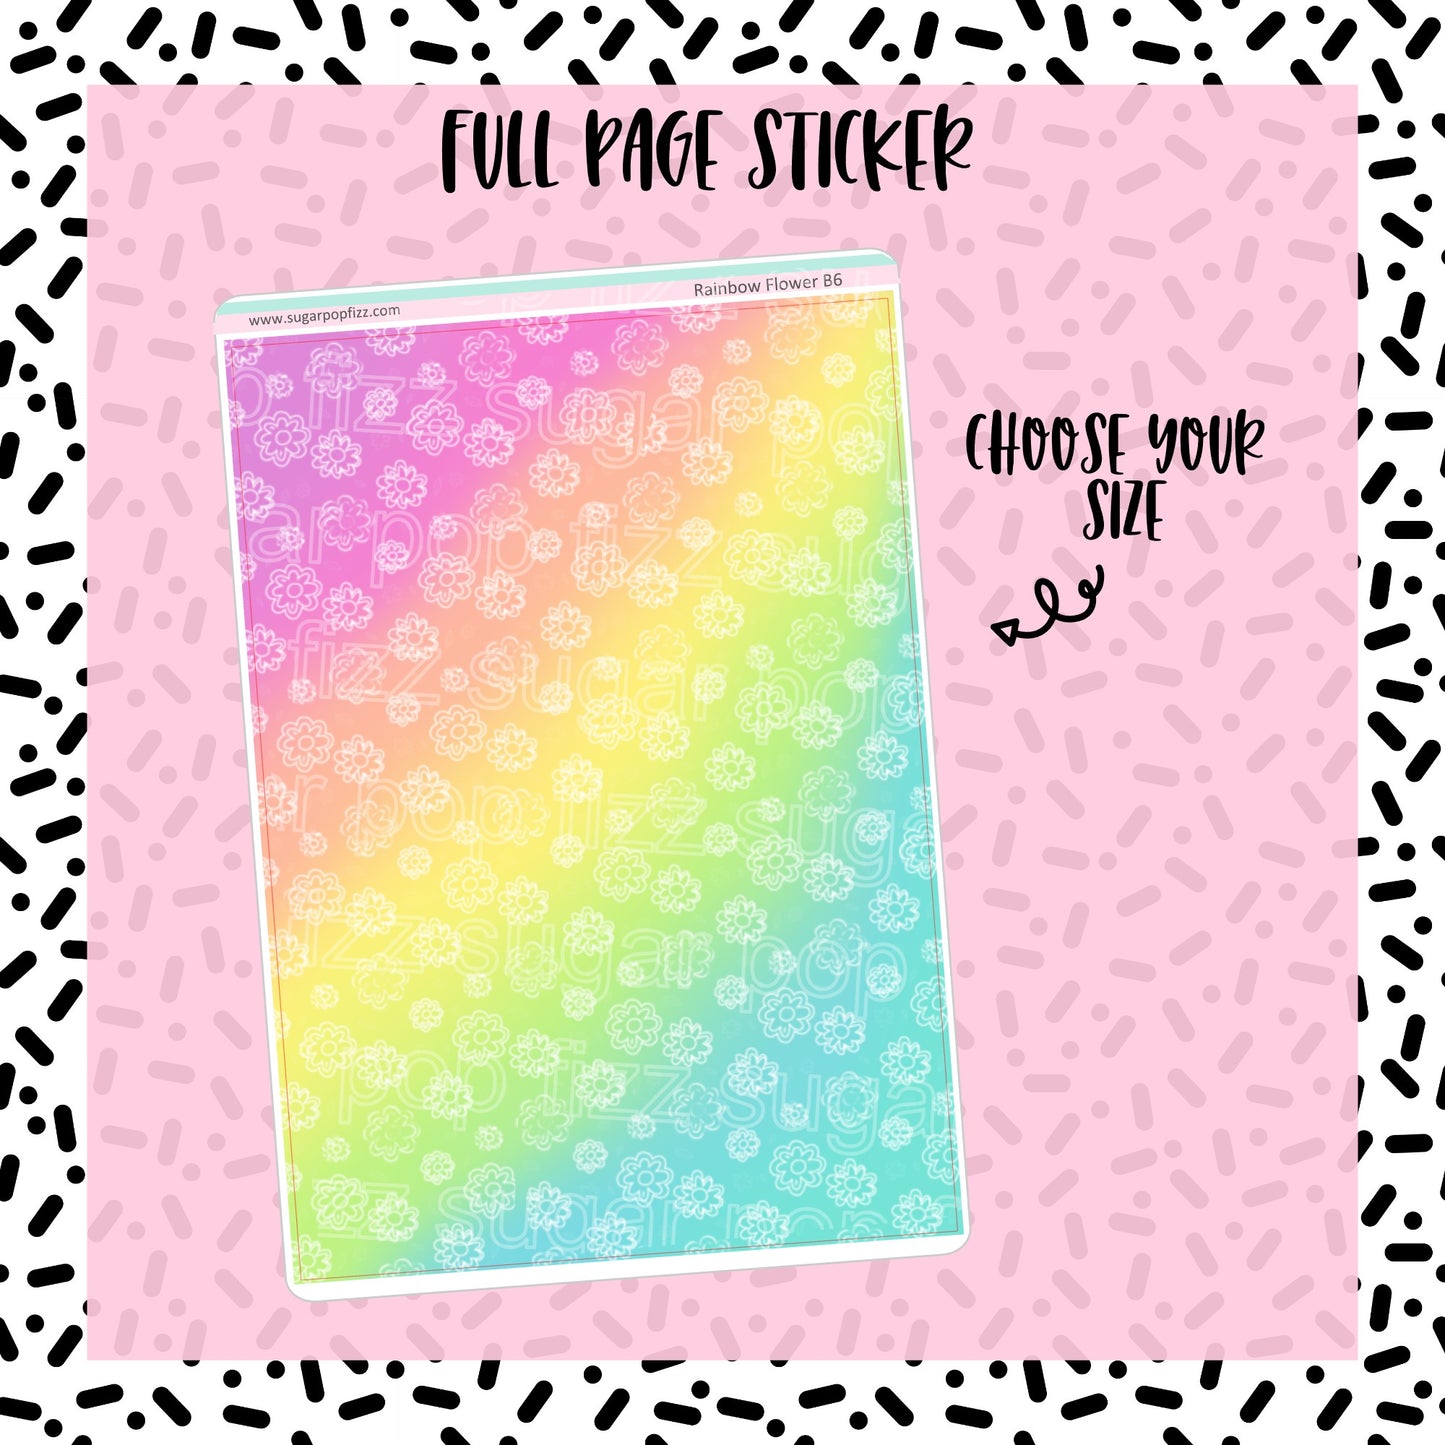 Rainbow Flower - Full Page Sticker